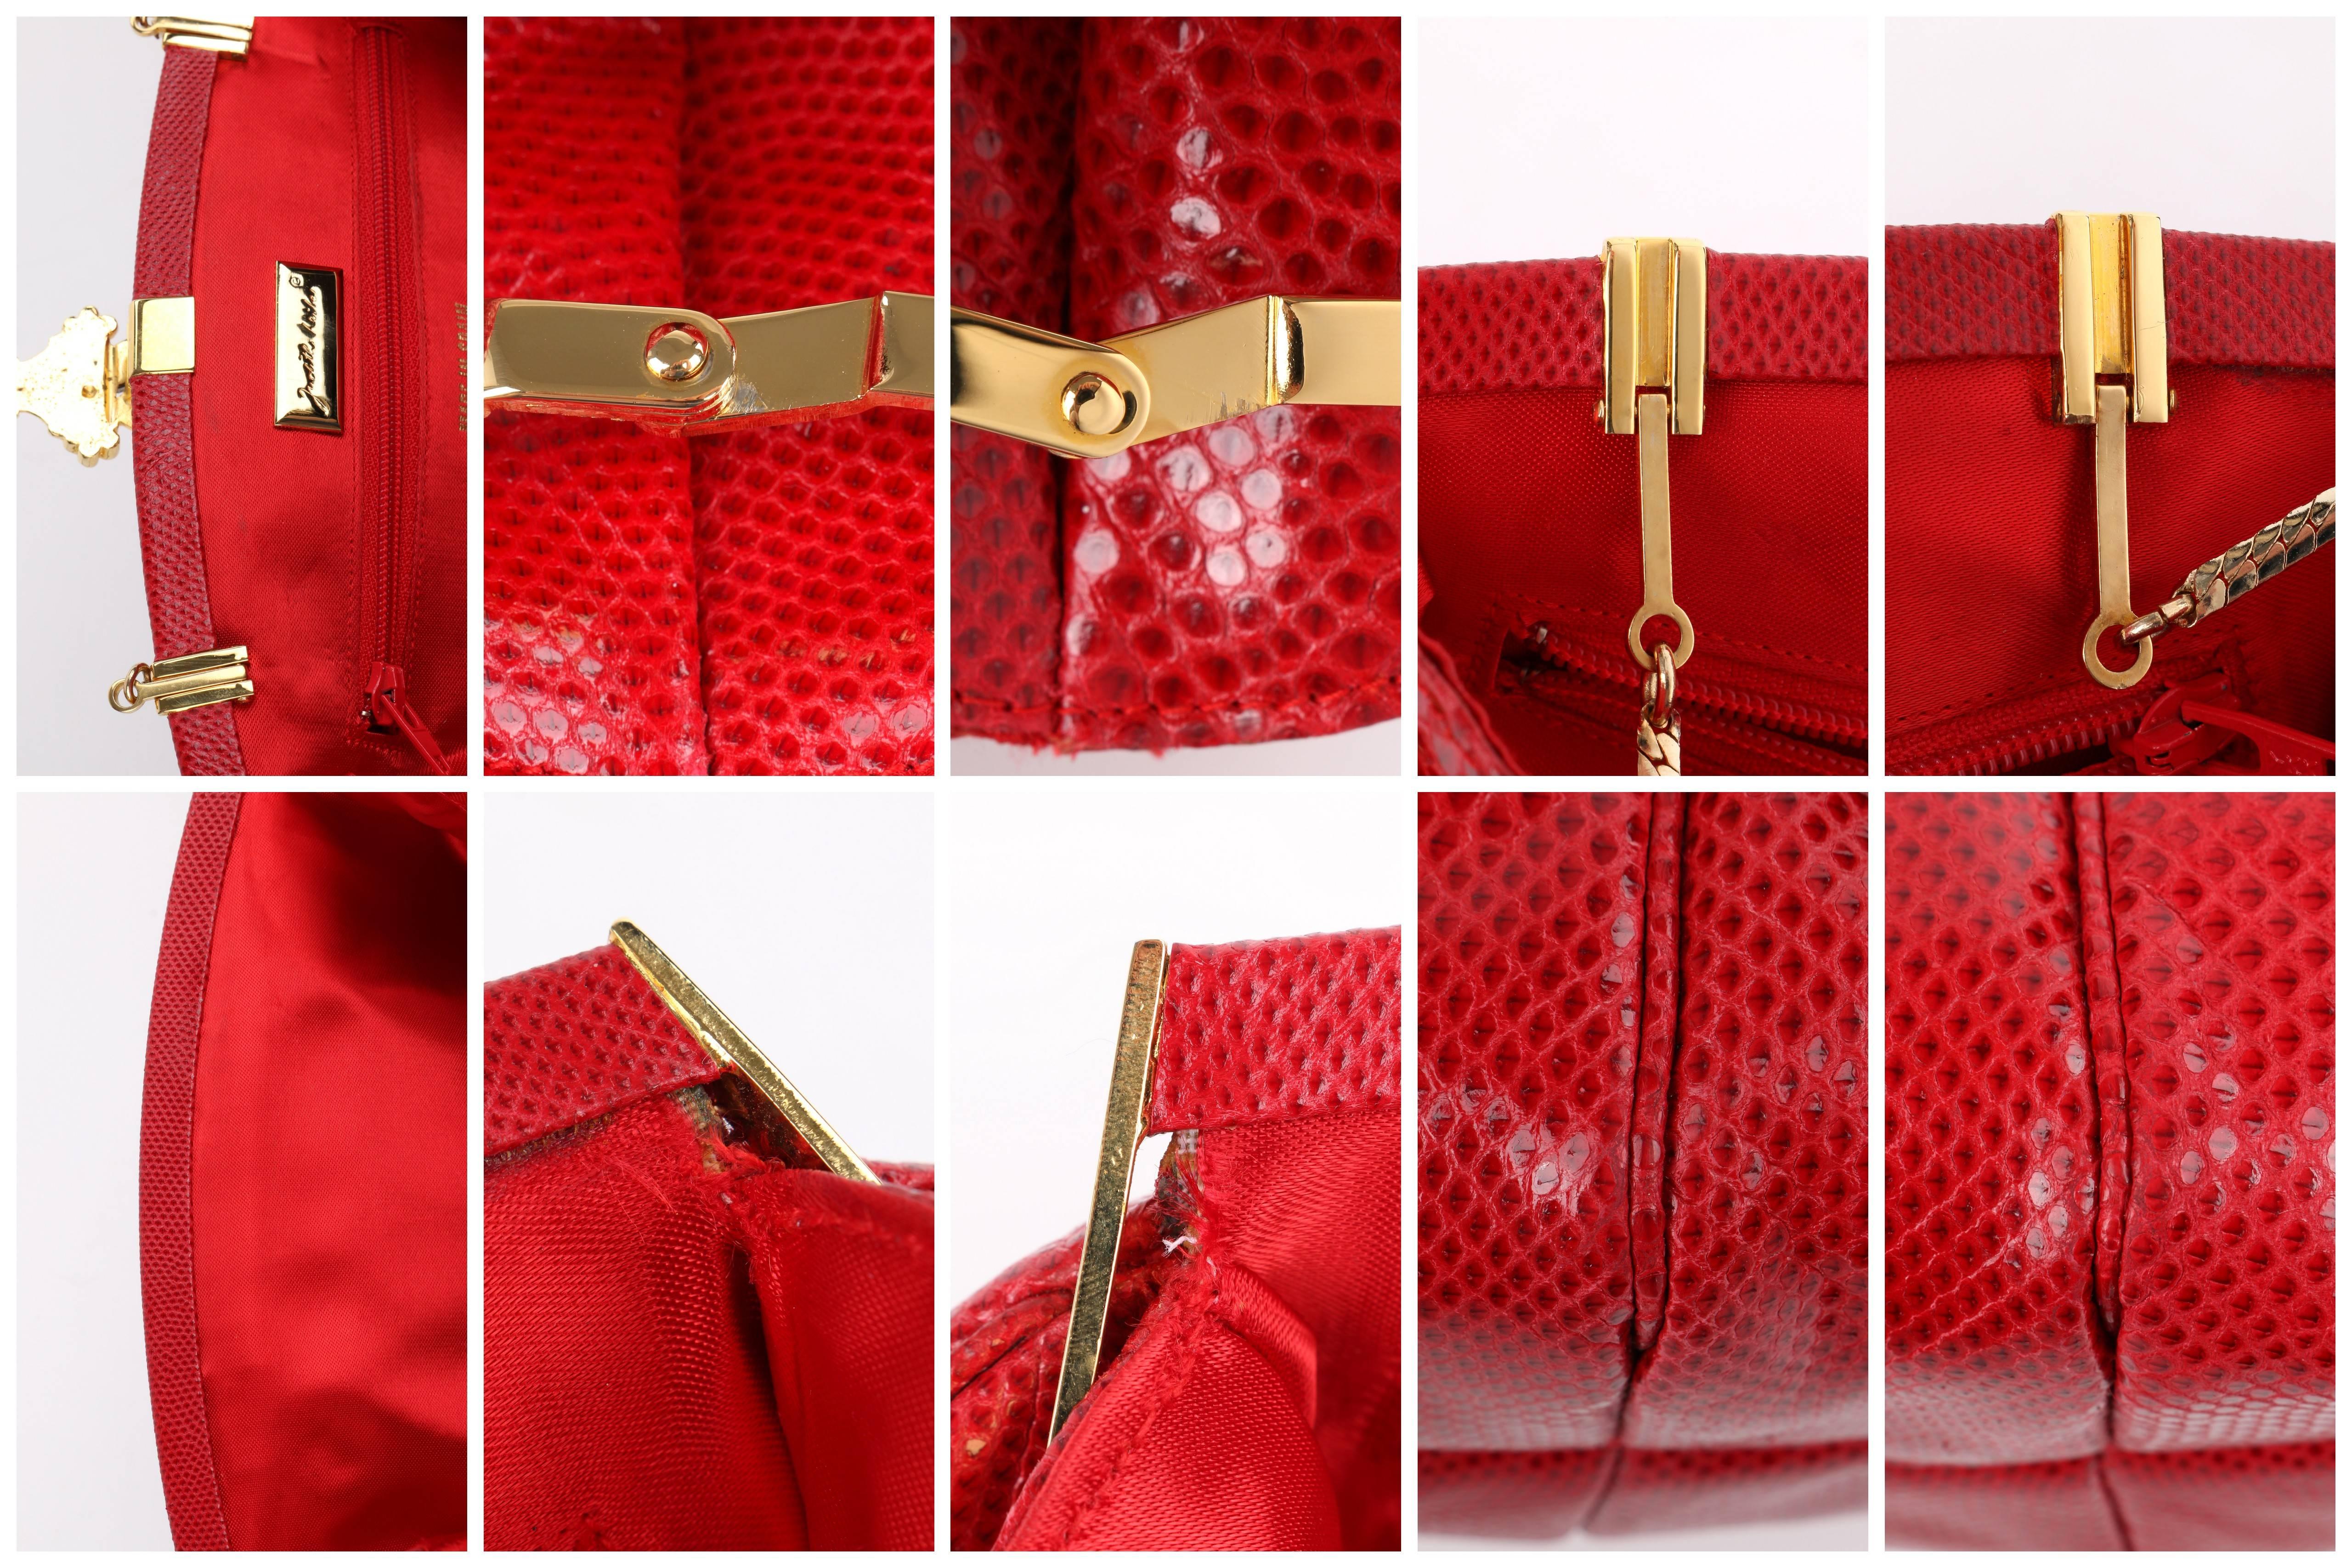 JUDITH LEIBER c.1980's Red Lizard Skin Leather Frame Top Evening Bag Purse 6